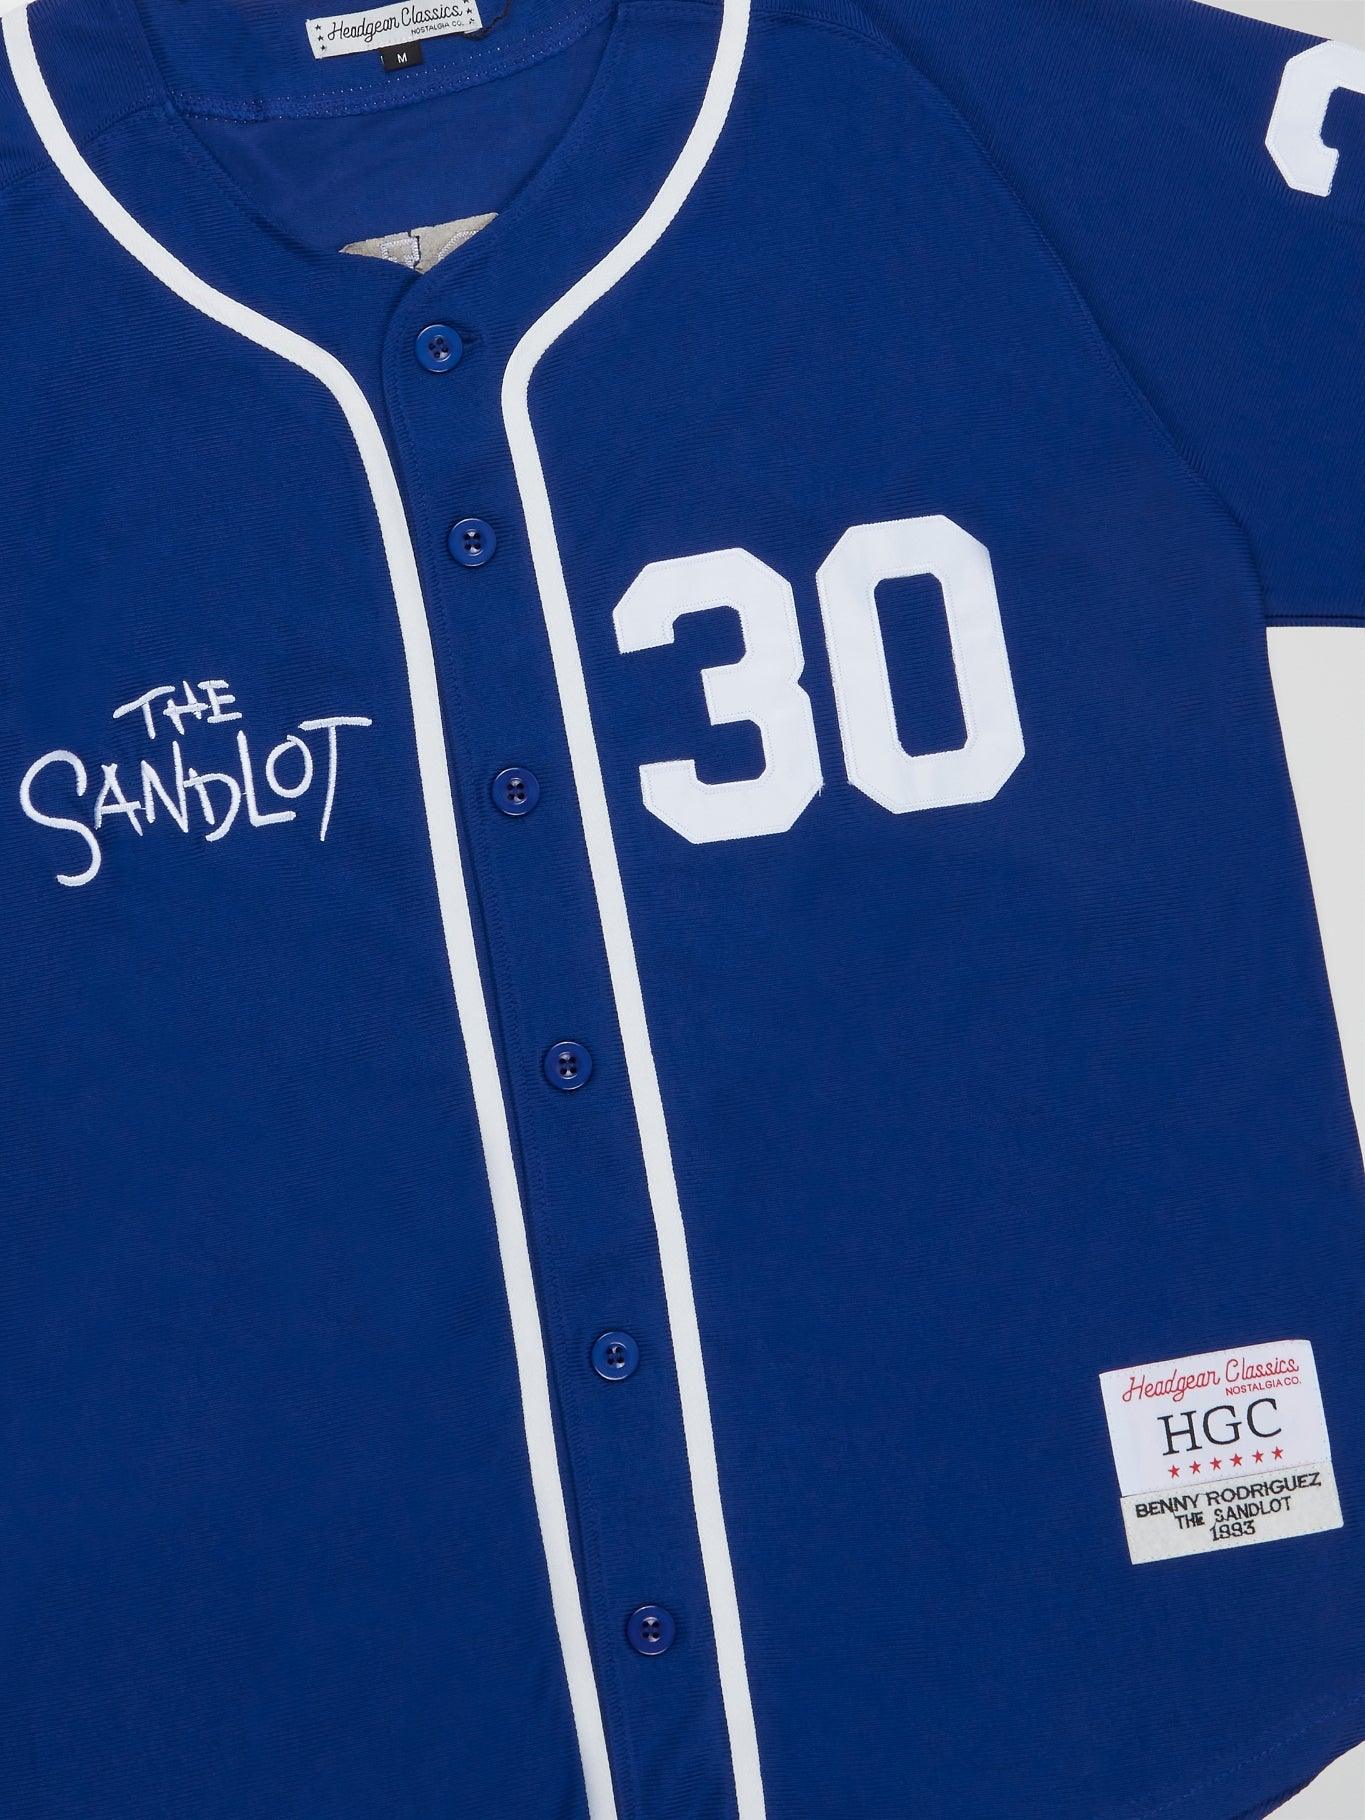 Blue Sandlot Baseball Jersey - B-Hype Society